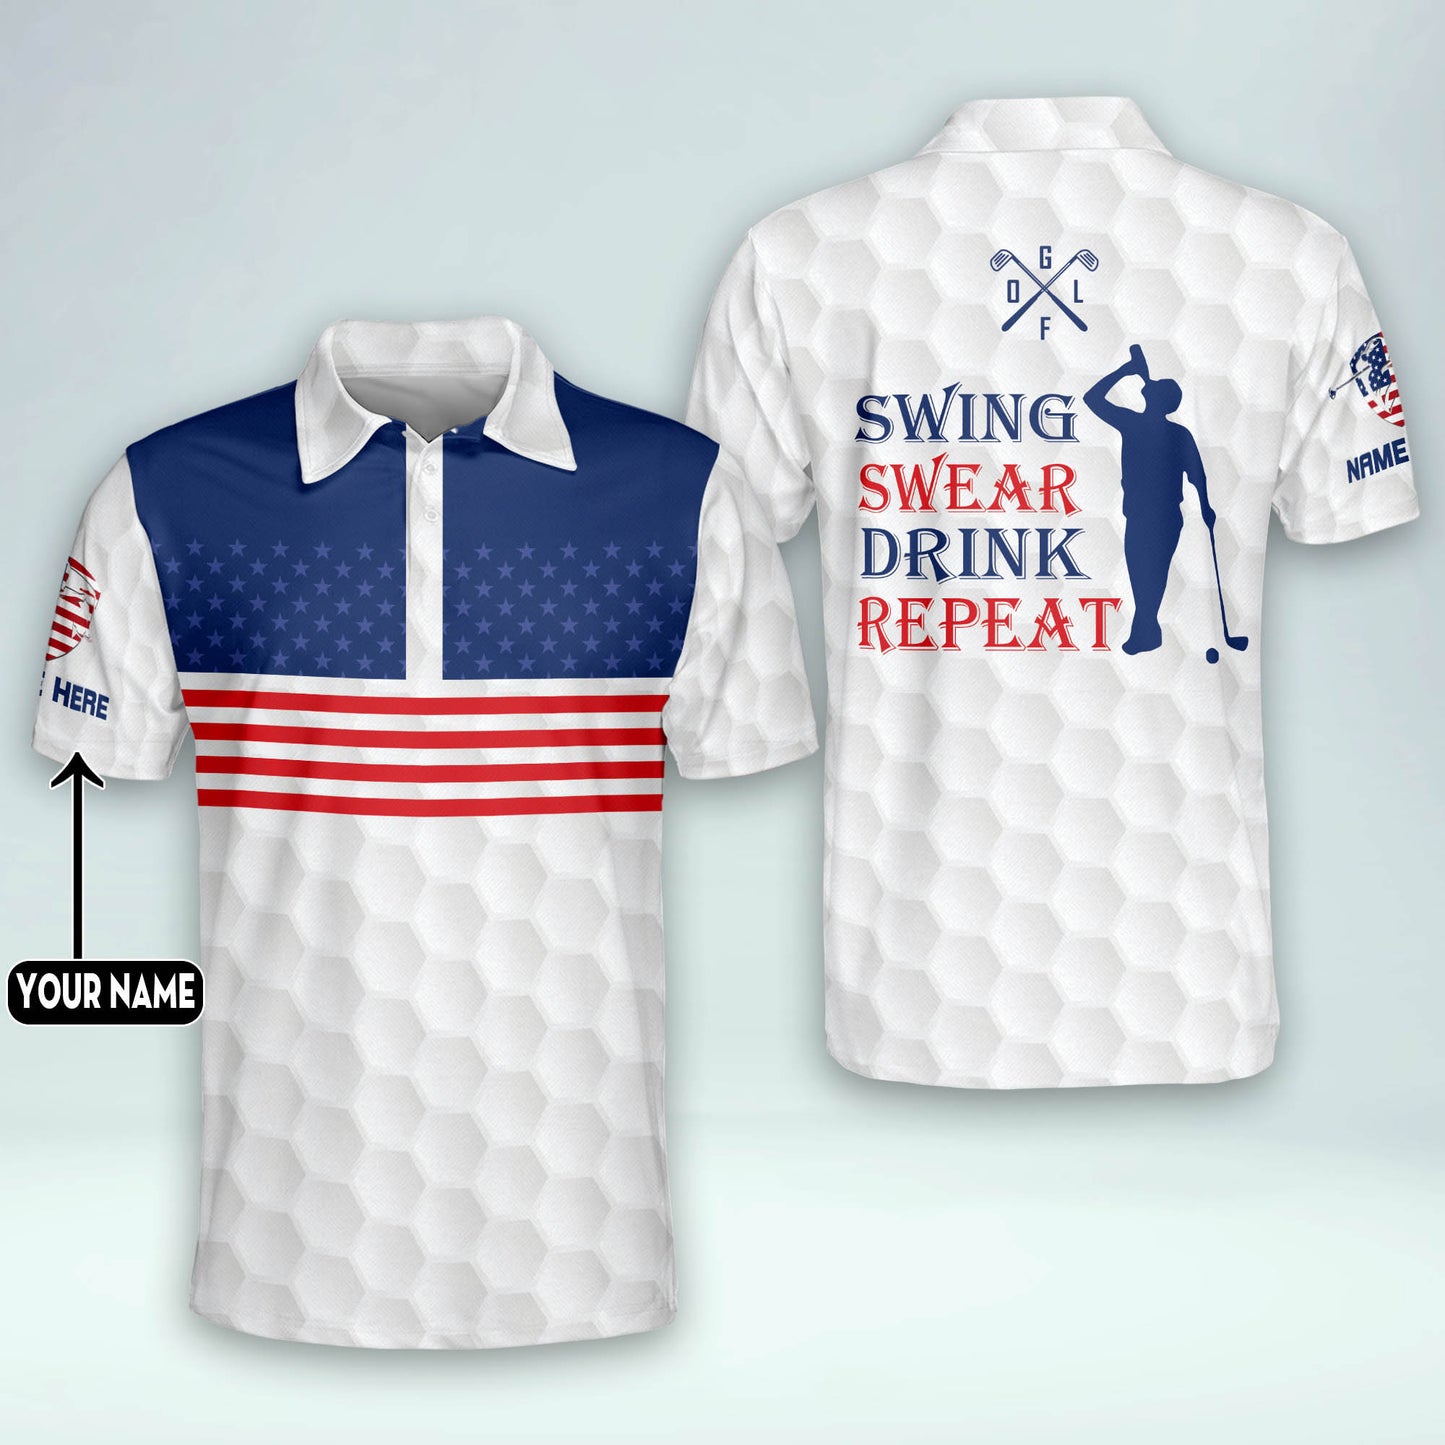 Swing Swear Drink Repeat Golf Polo Shirt GM0358